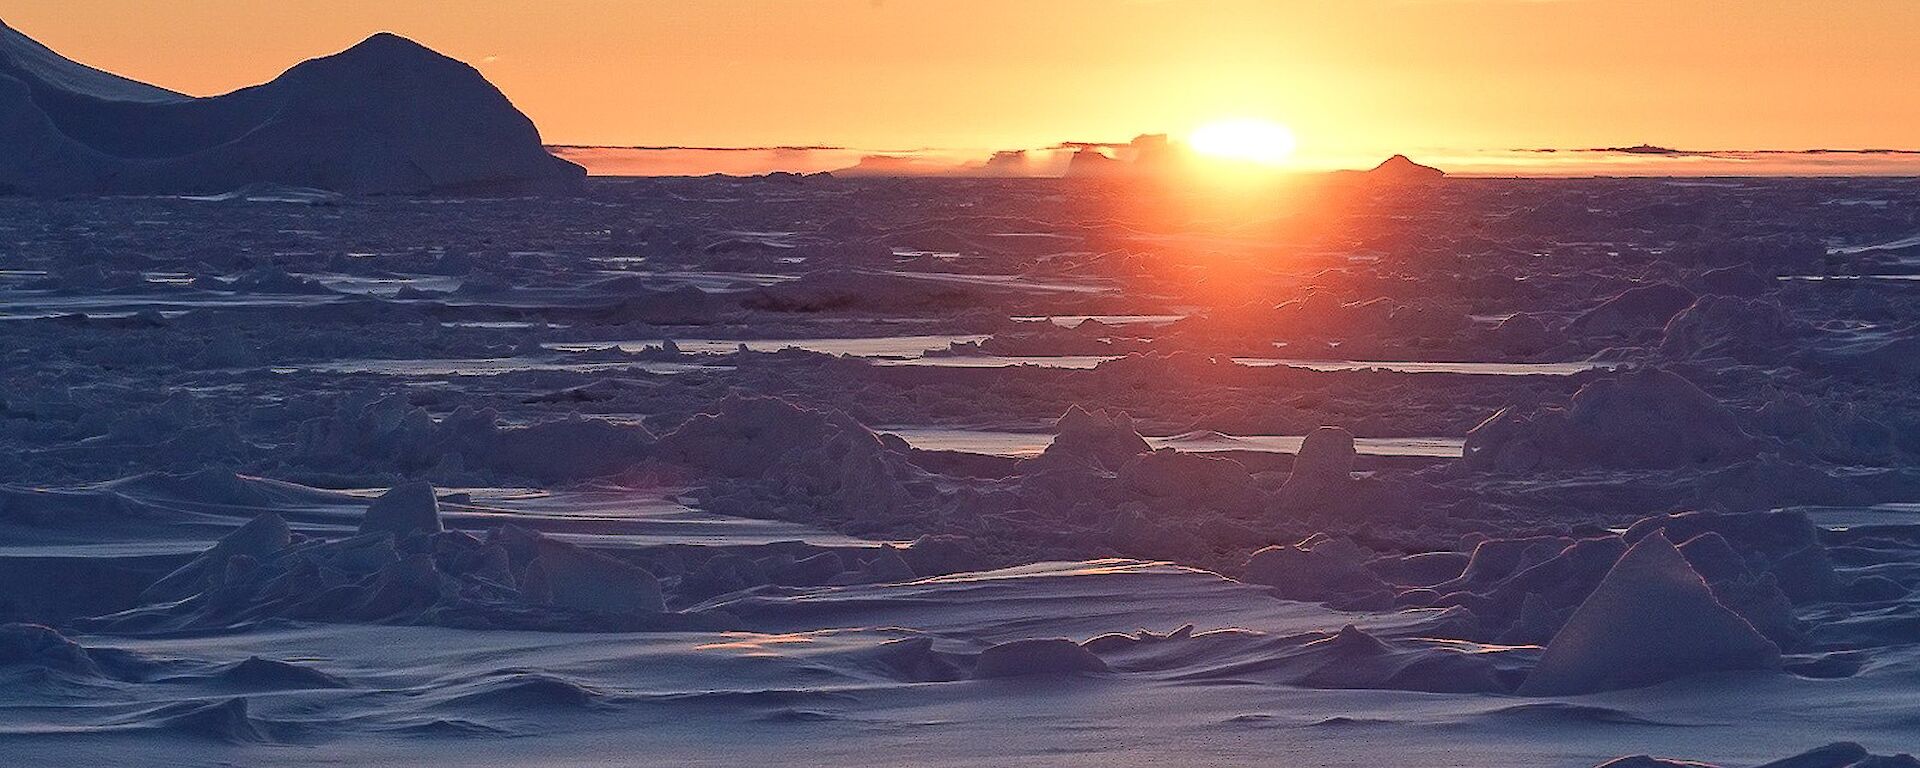 Sun setting over the ice